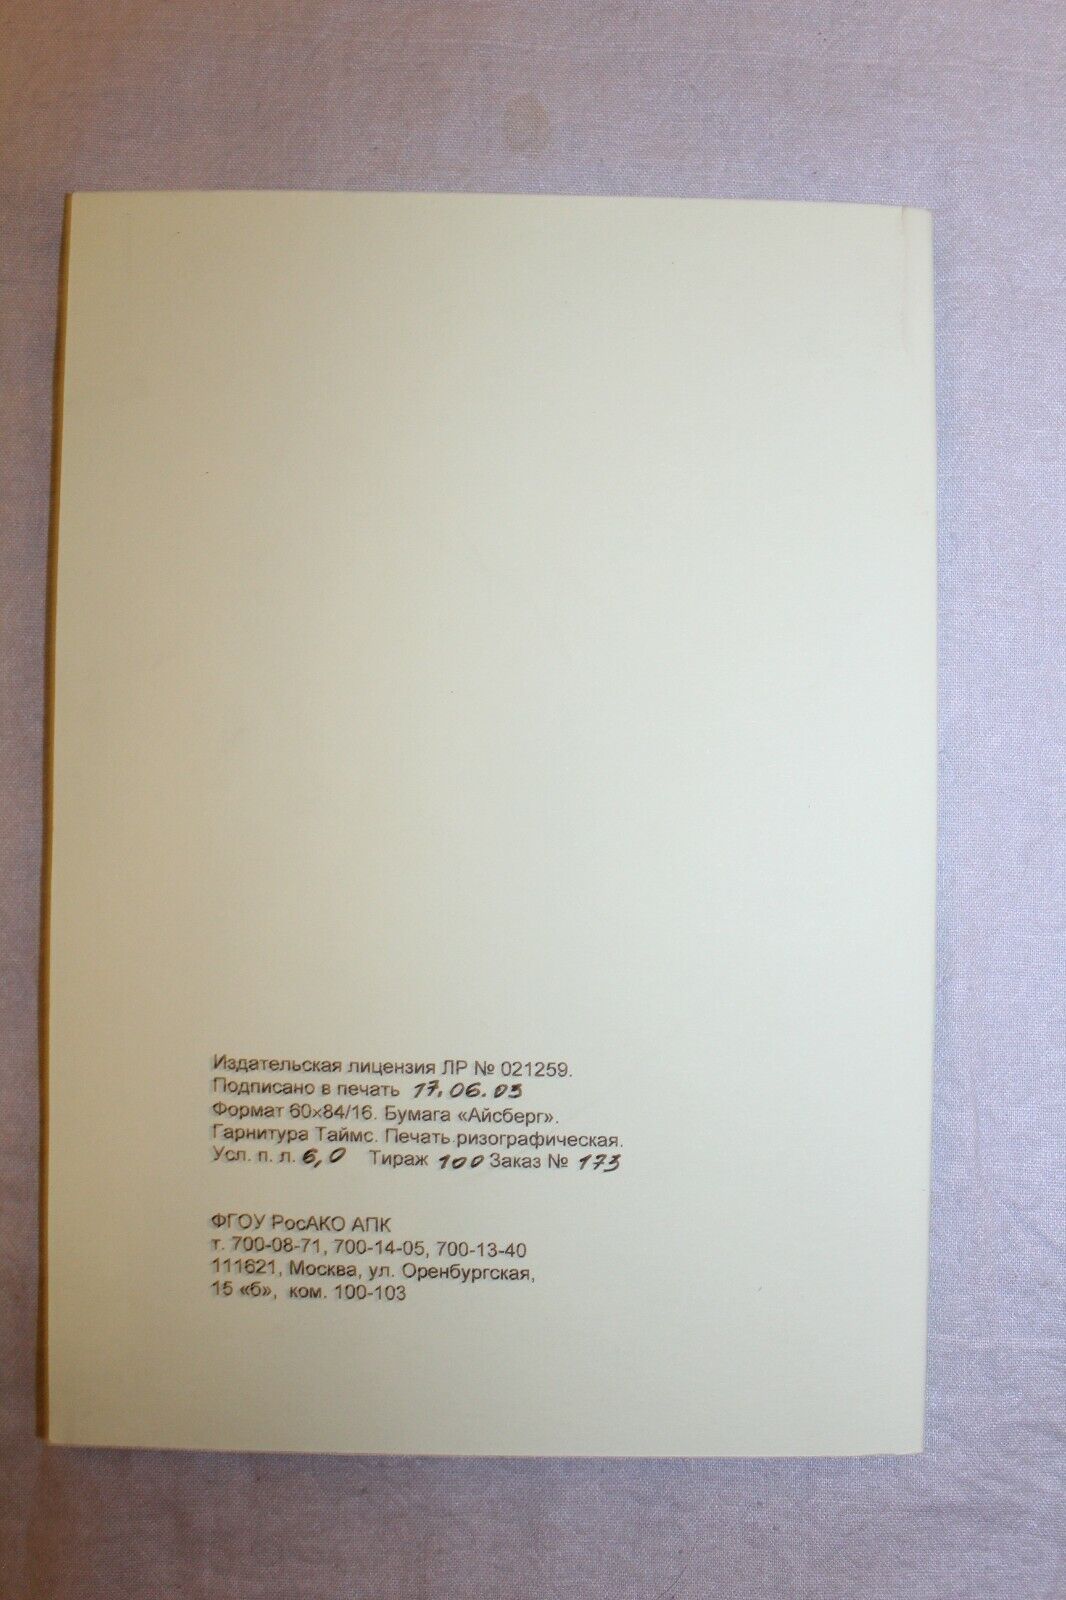 11432.Russian Book. Chess Lessons in Junior School. Timofeev. Print run 100 copies